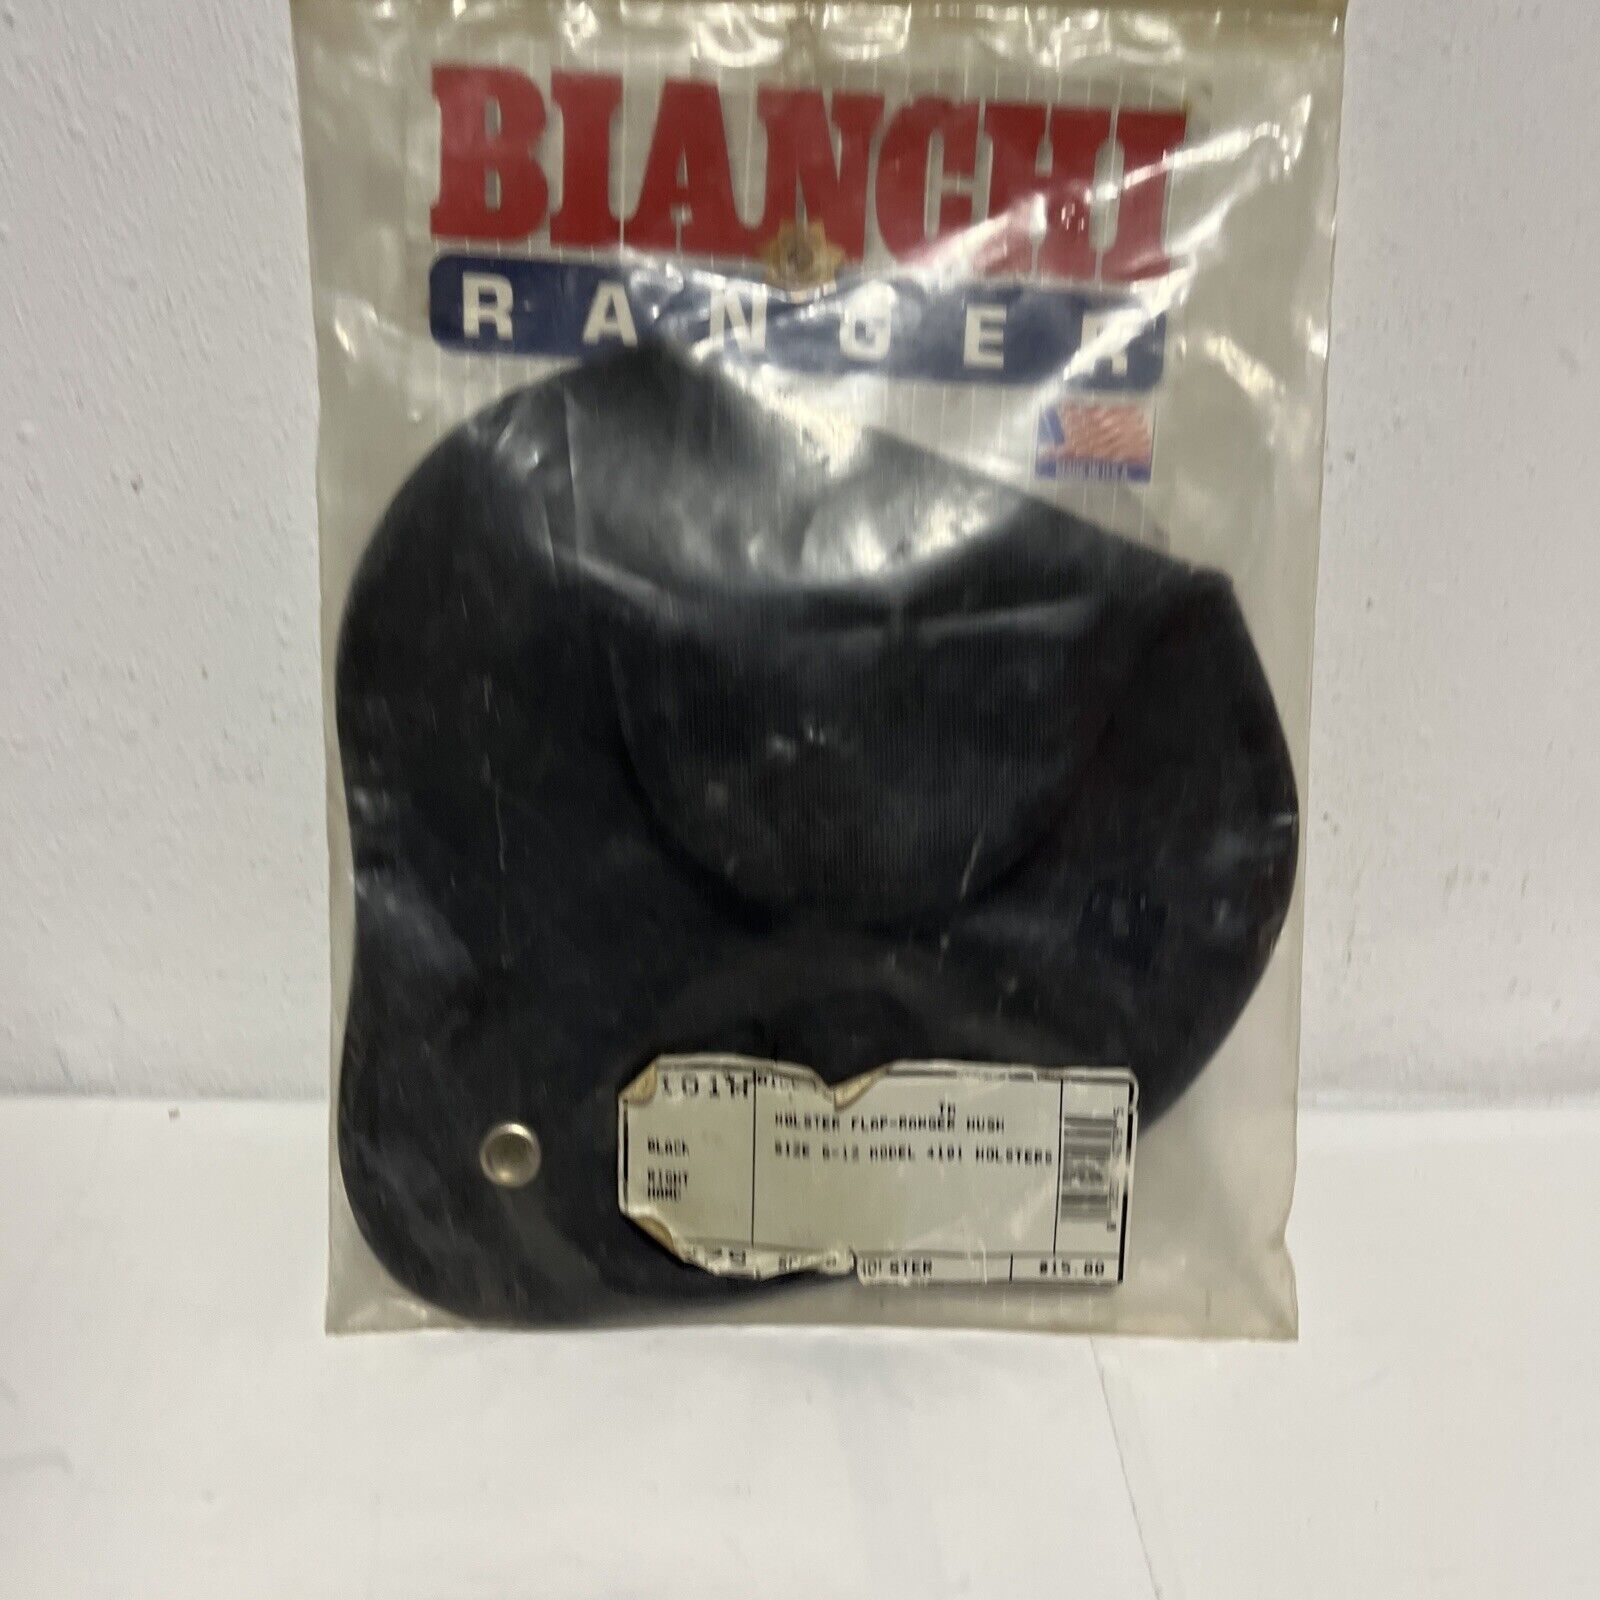 Primary image for Biancho Ranger Holster black RH size 6-12 moddl 4101